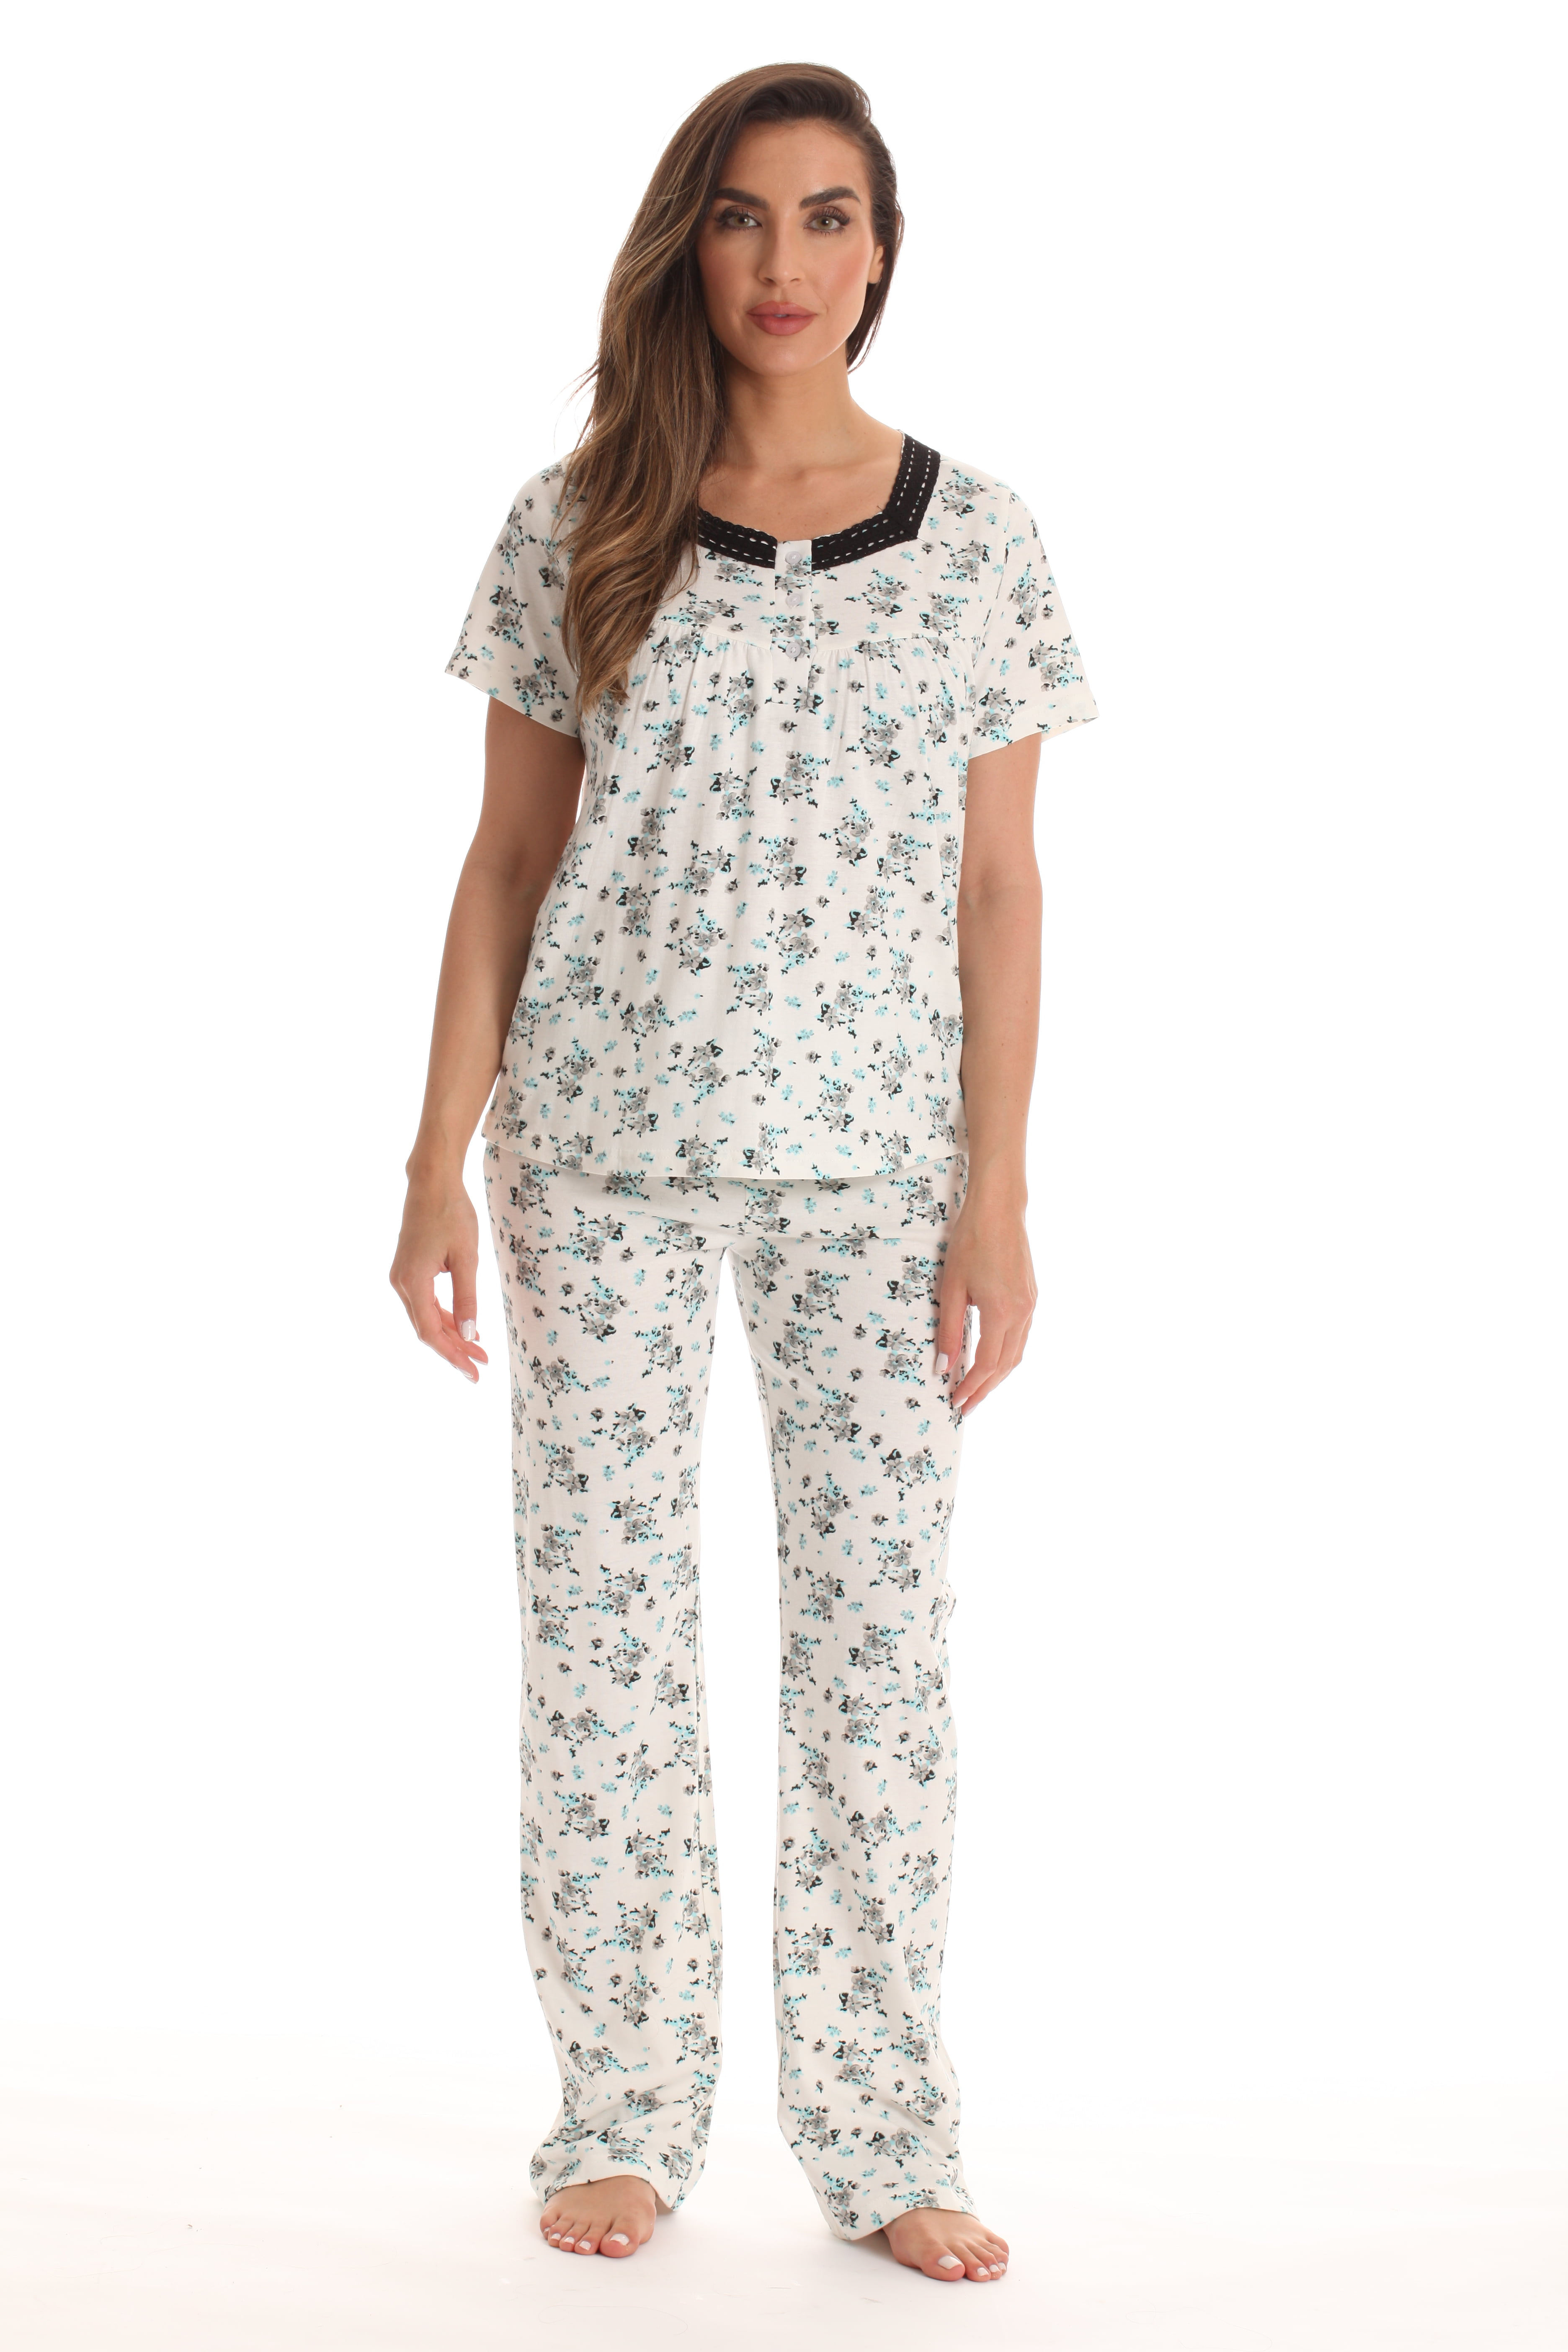 Dreamcrest 100% Cotton Pajama Pant Set for Women (Grey, X-Large ...